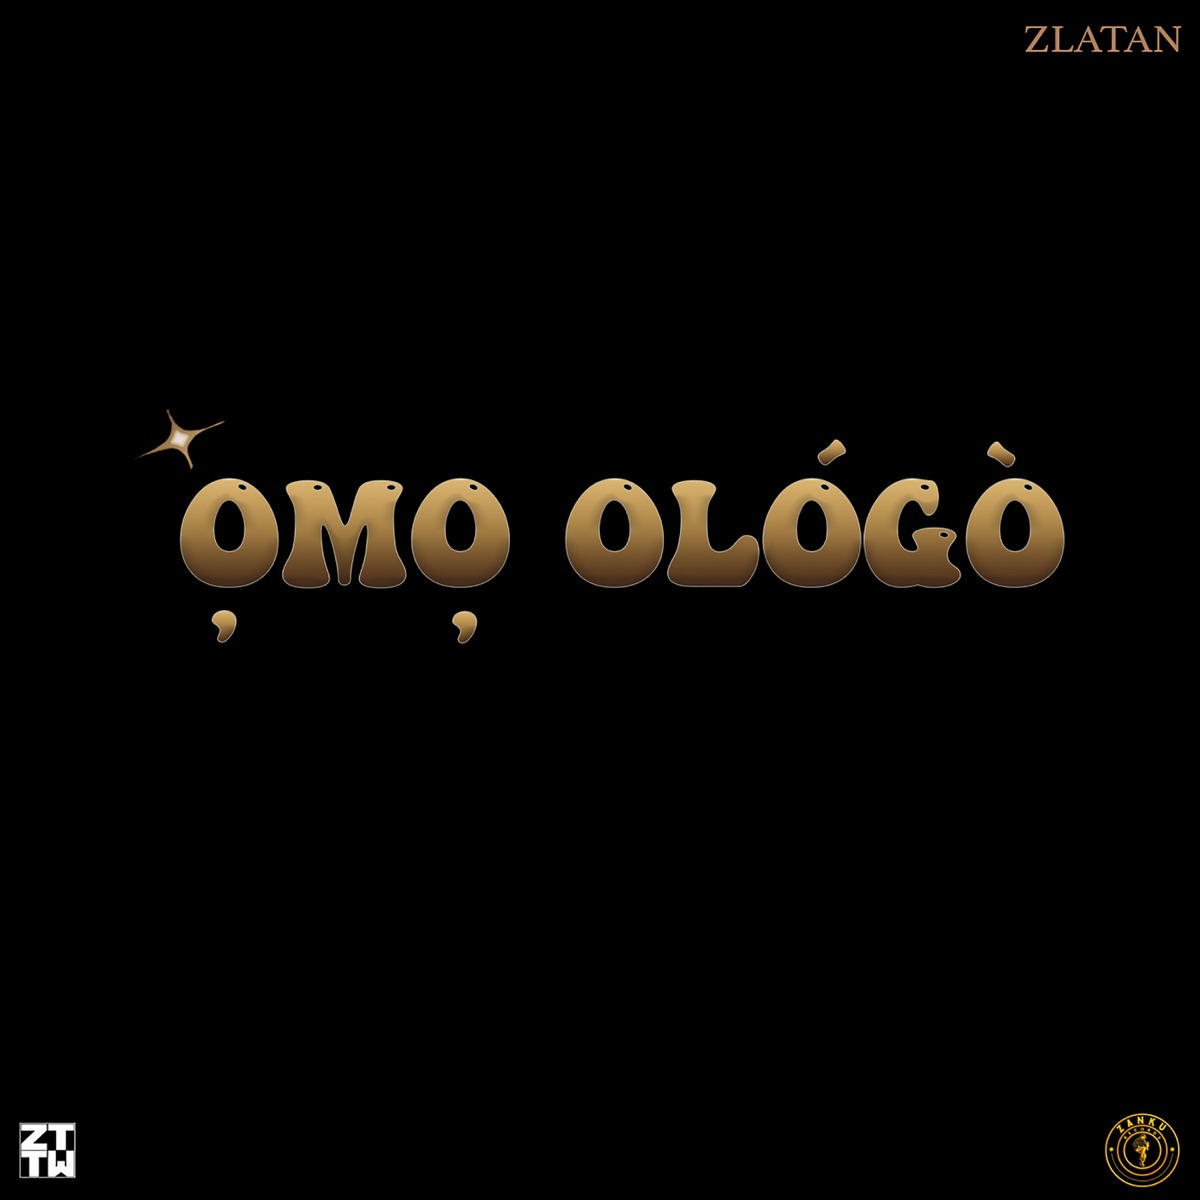 Zlatan - Omo Ologo - Single